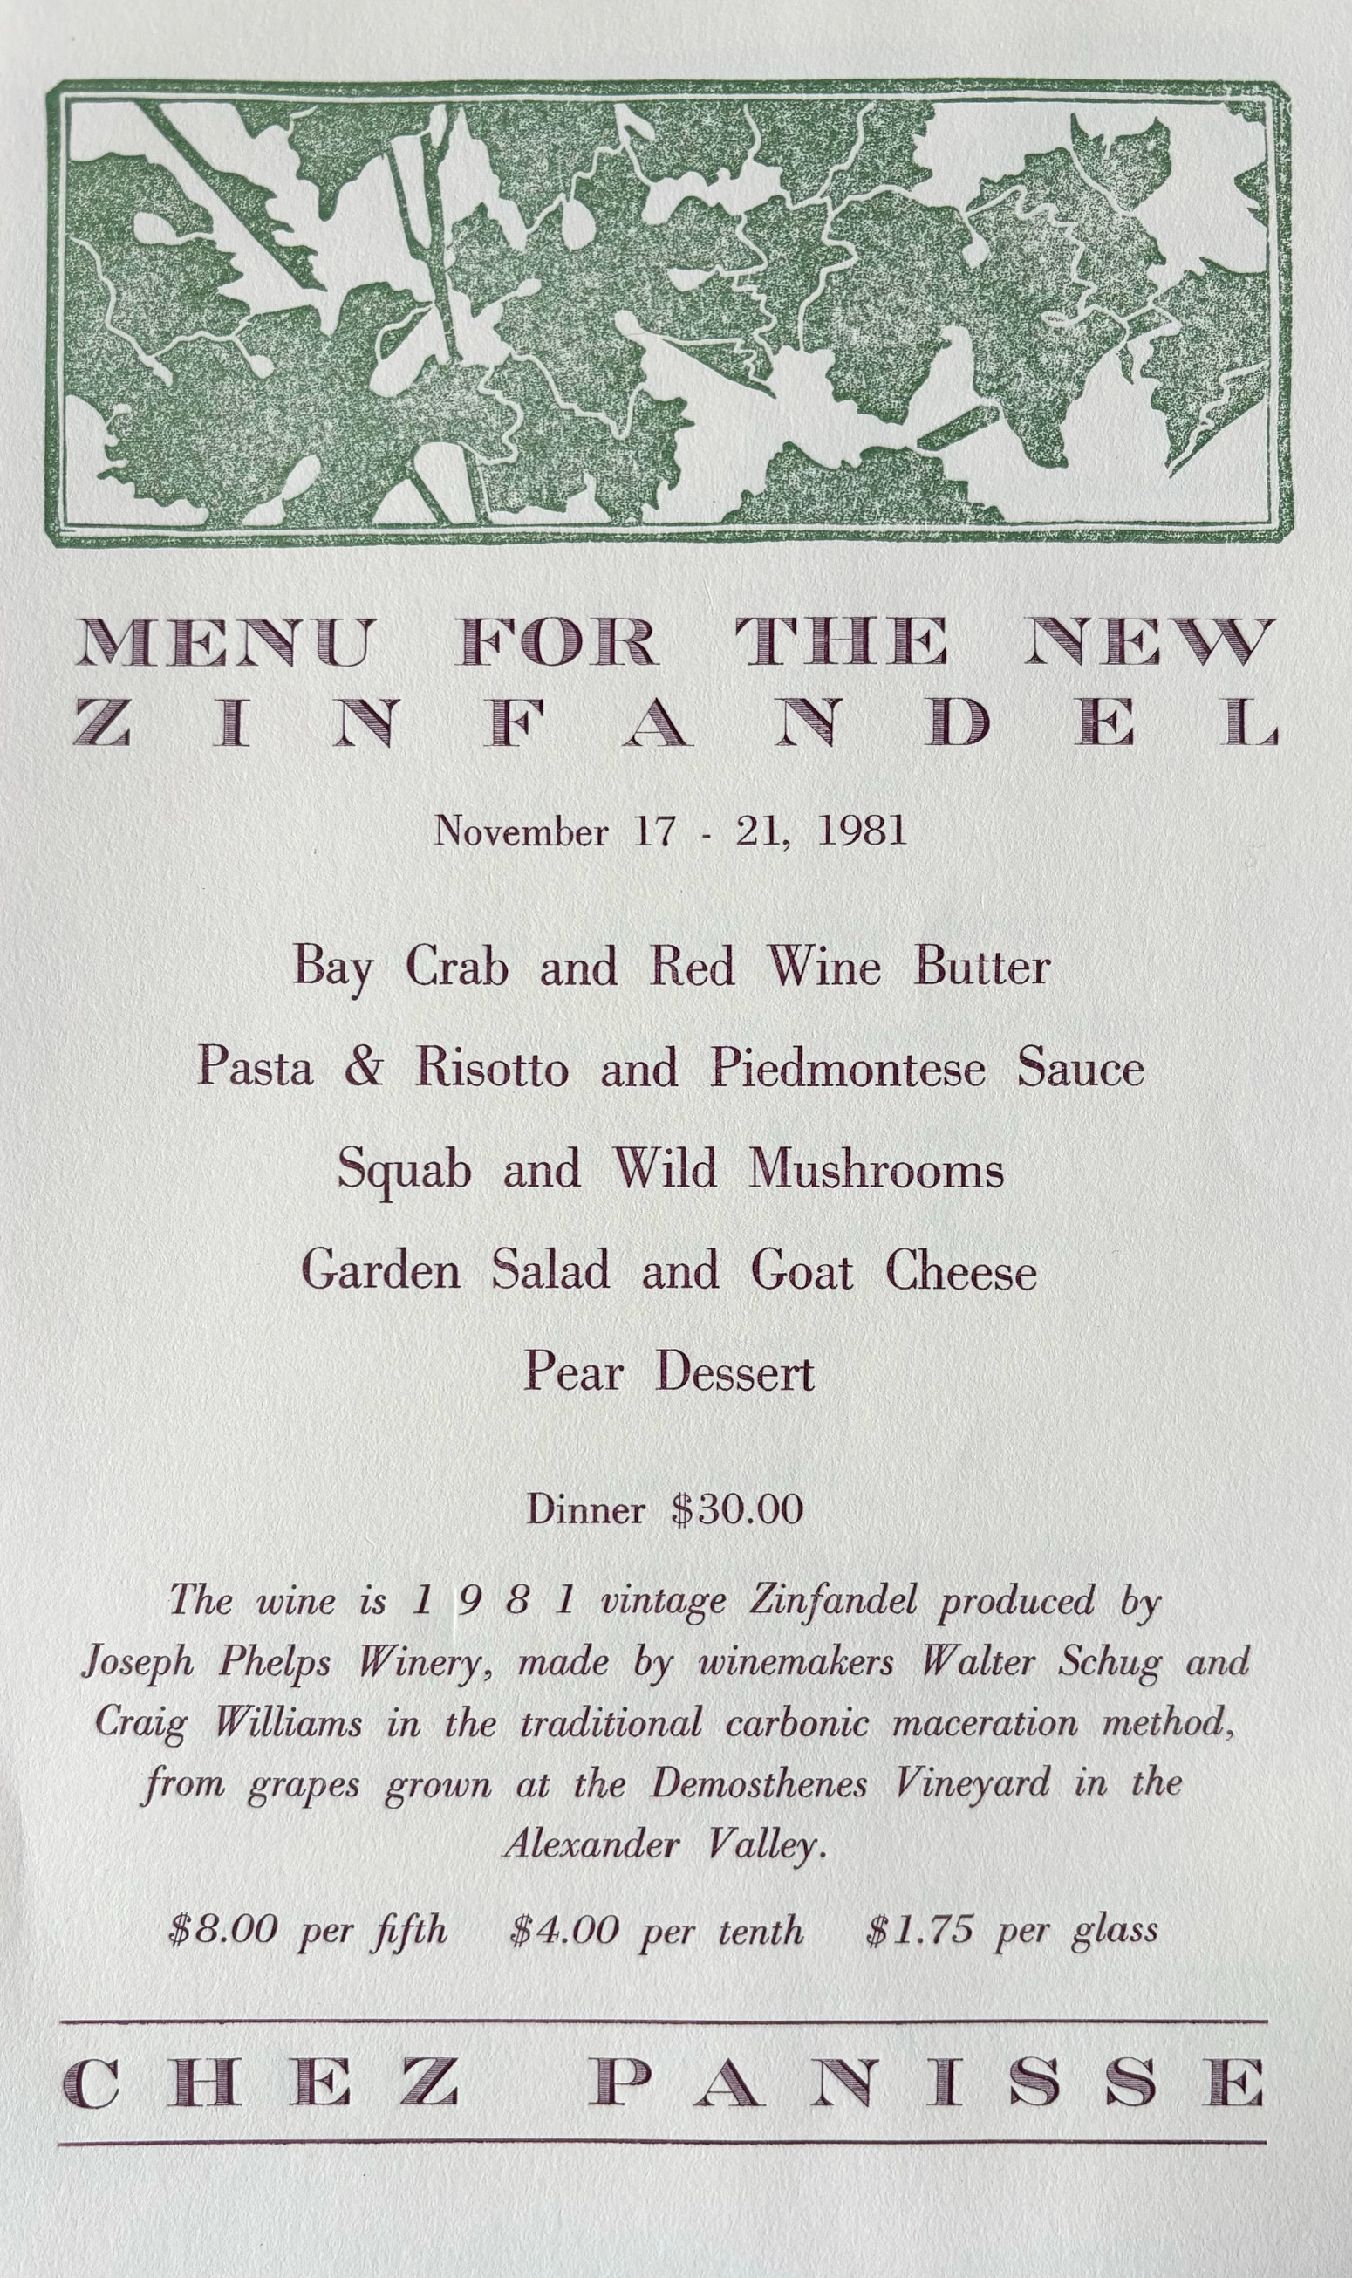 (*NEW ARRIVAL*) Chez Panisse. Menu for the New Zinfandel, November 17-21, 1981